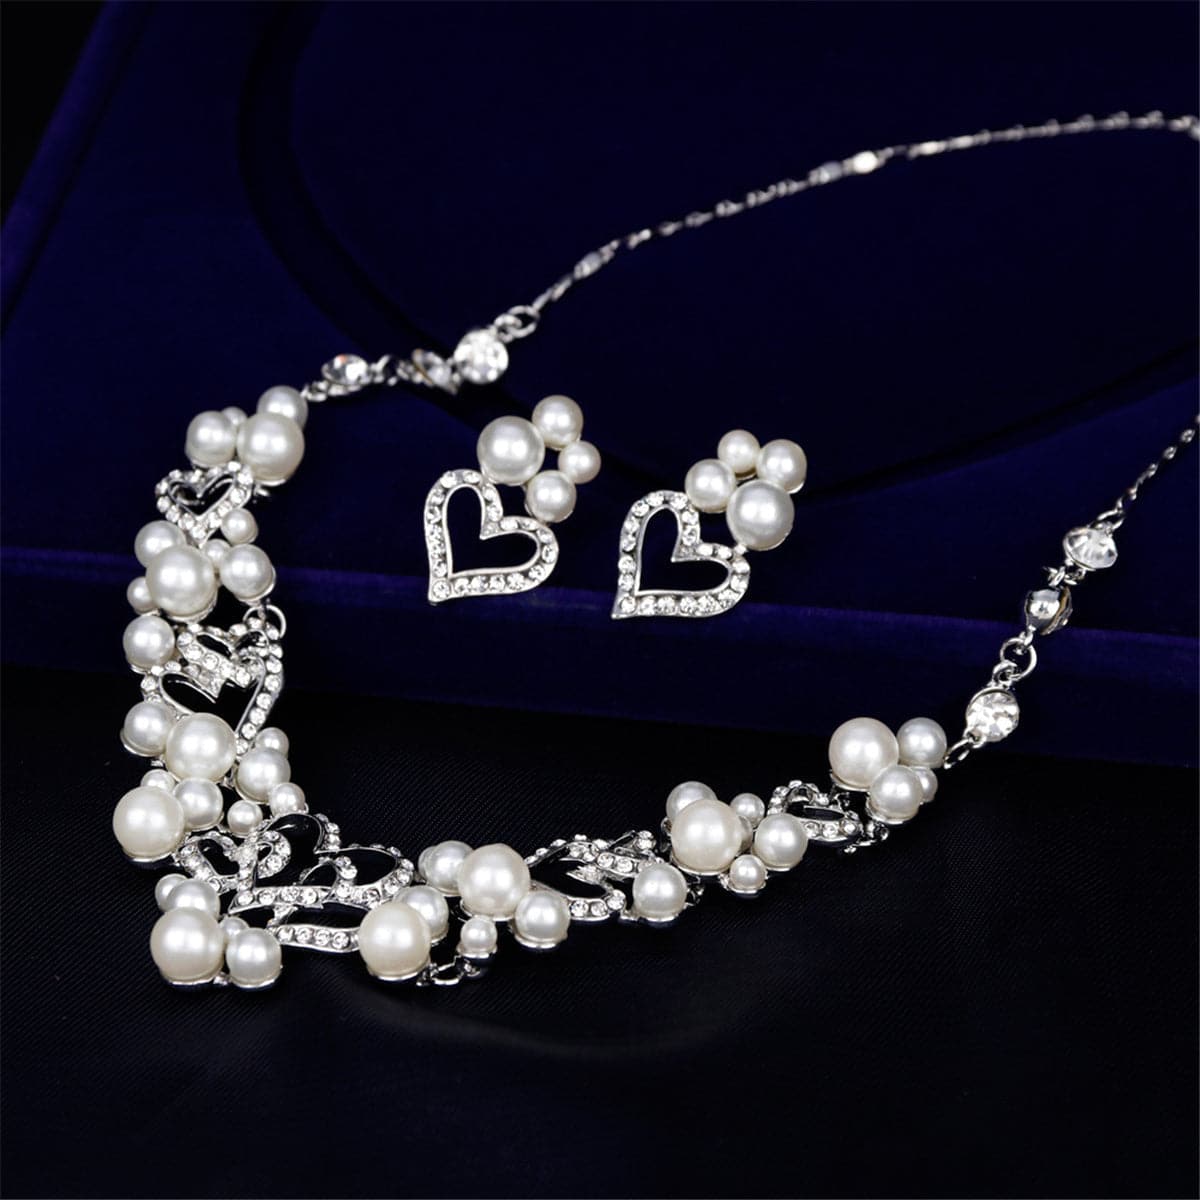 Pearl & Cubic Zirconia Heart Statement Necklace Set